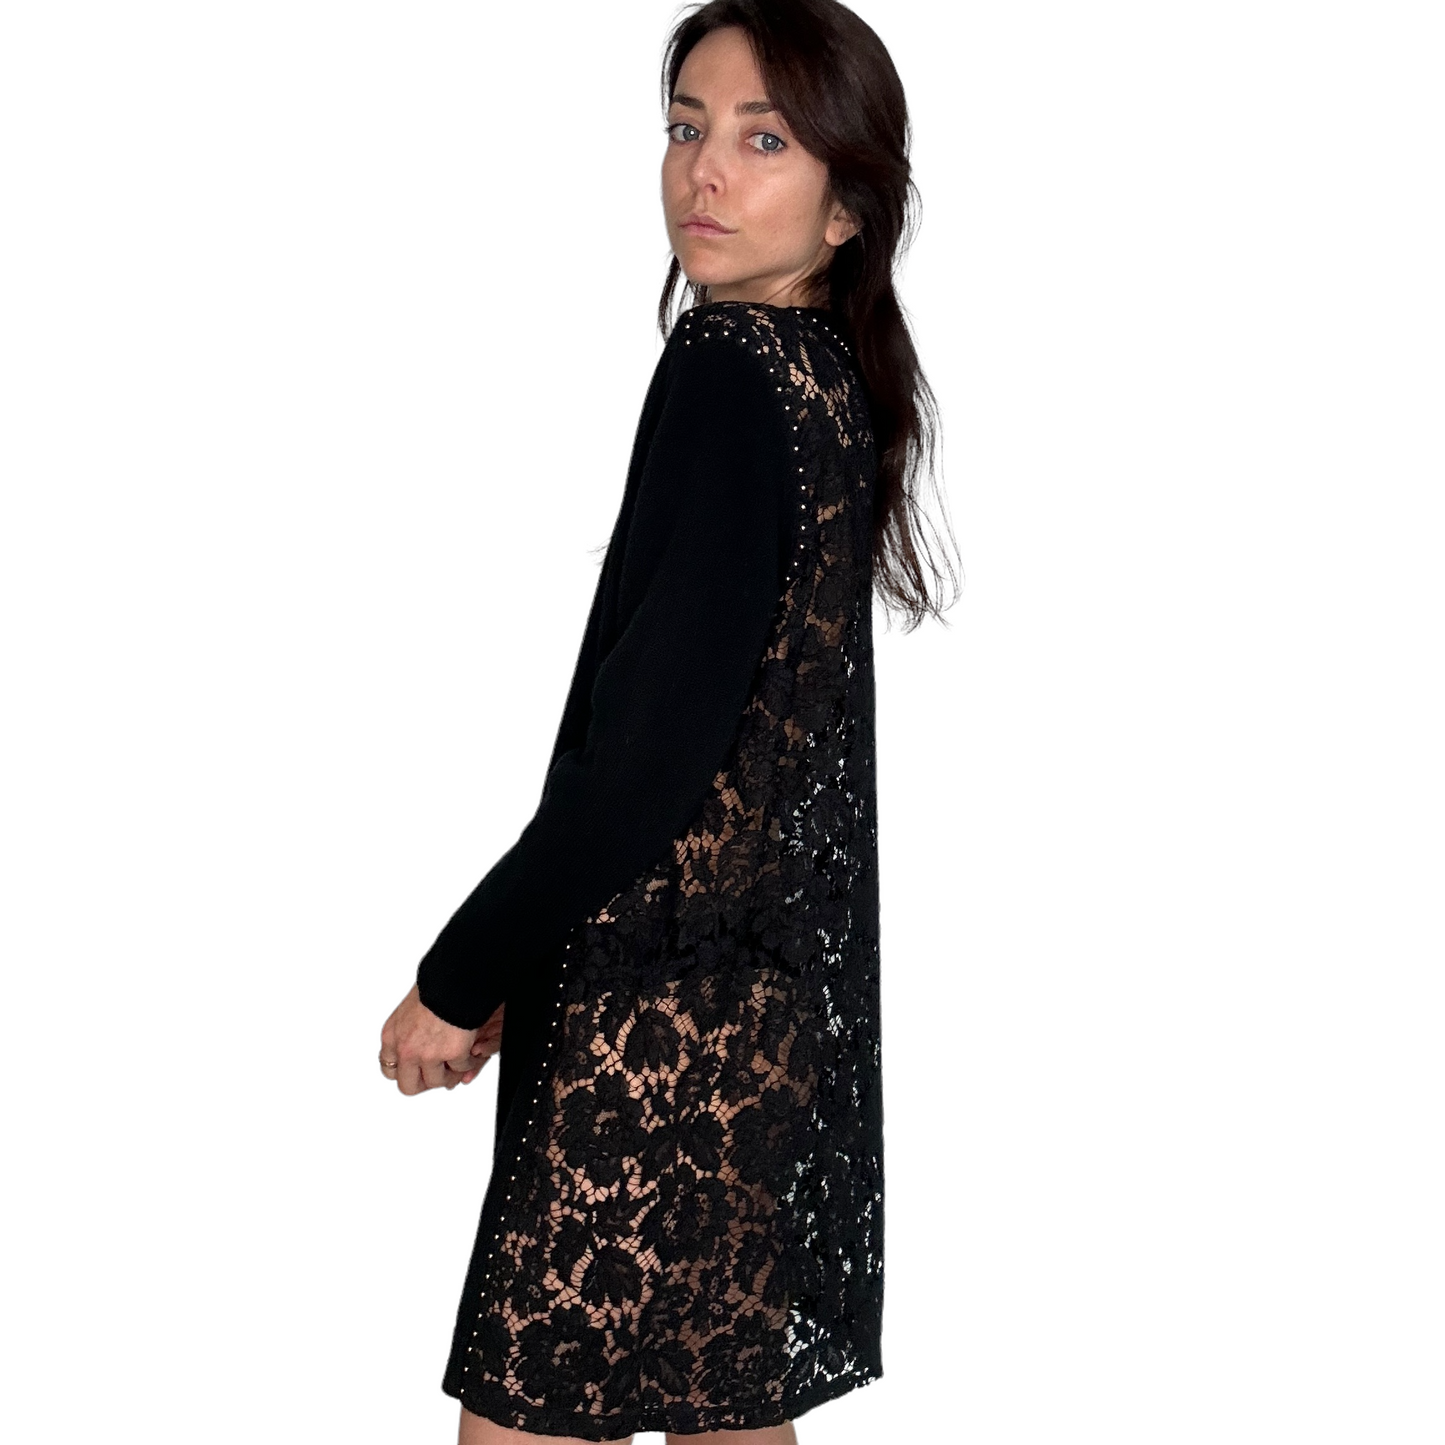 Black Dress with Lace & Studs - M